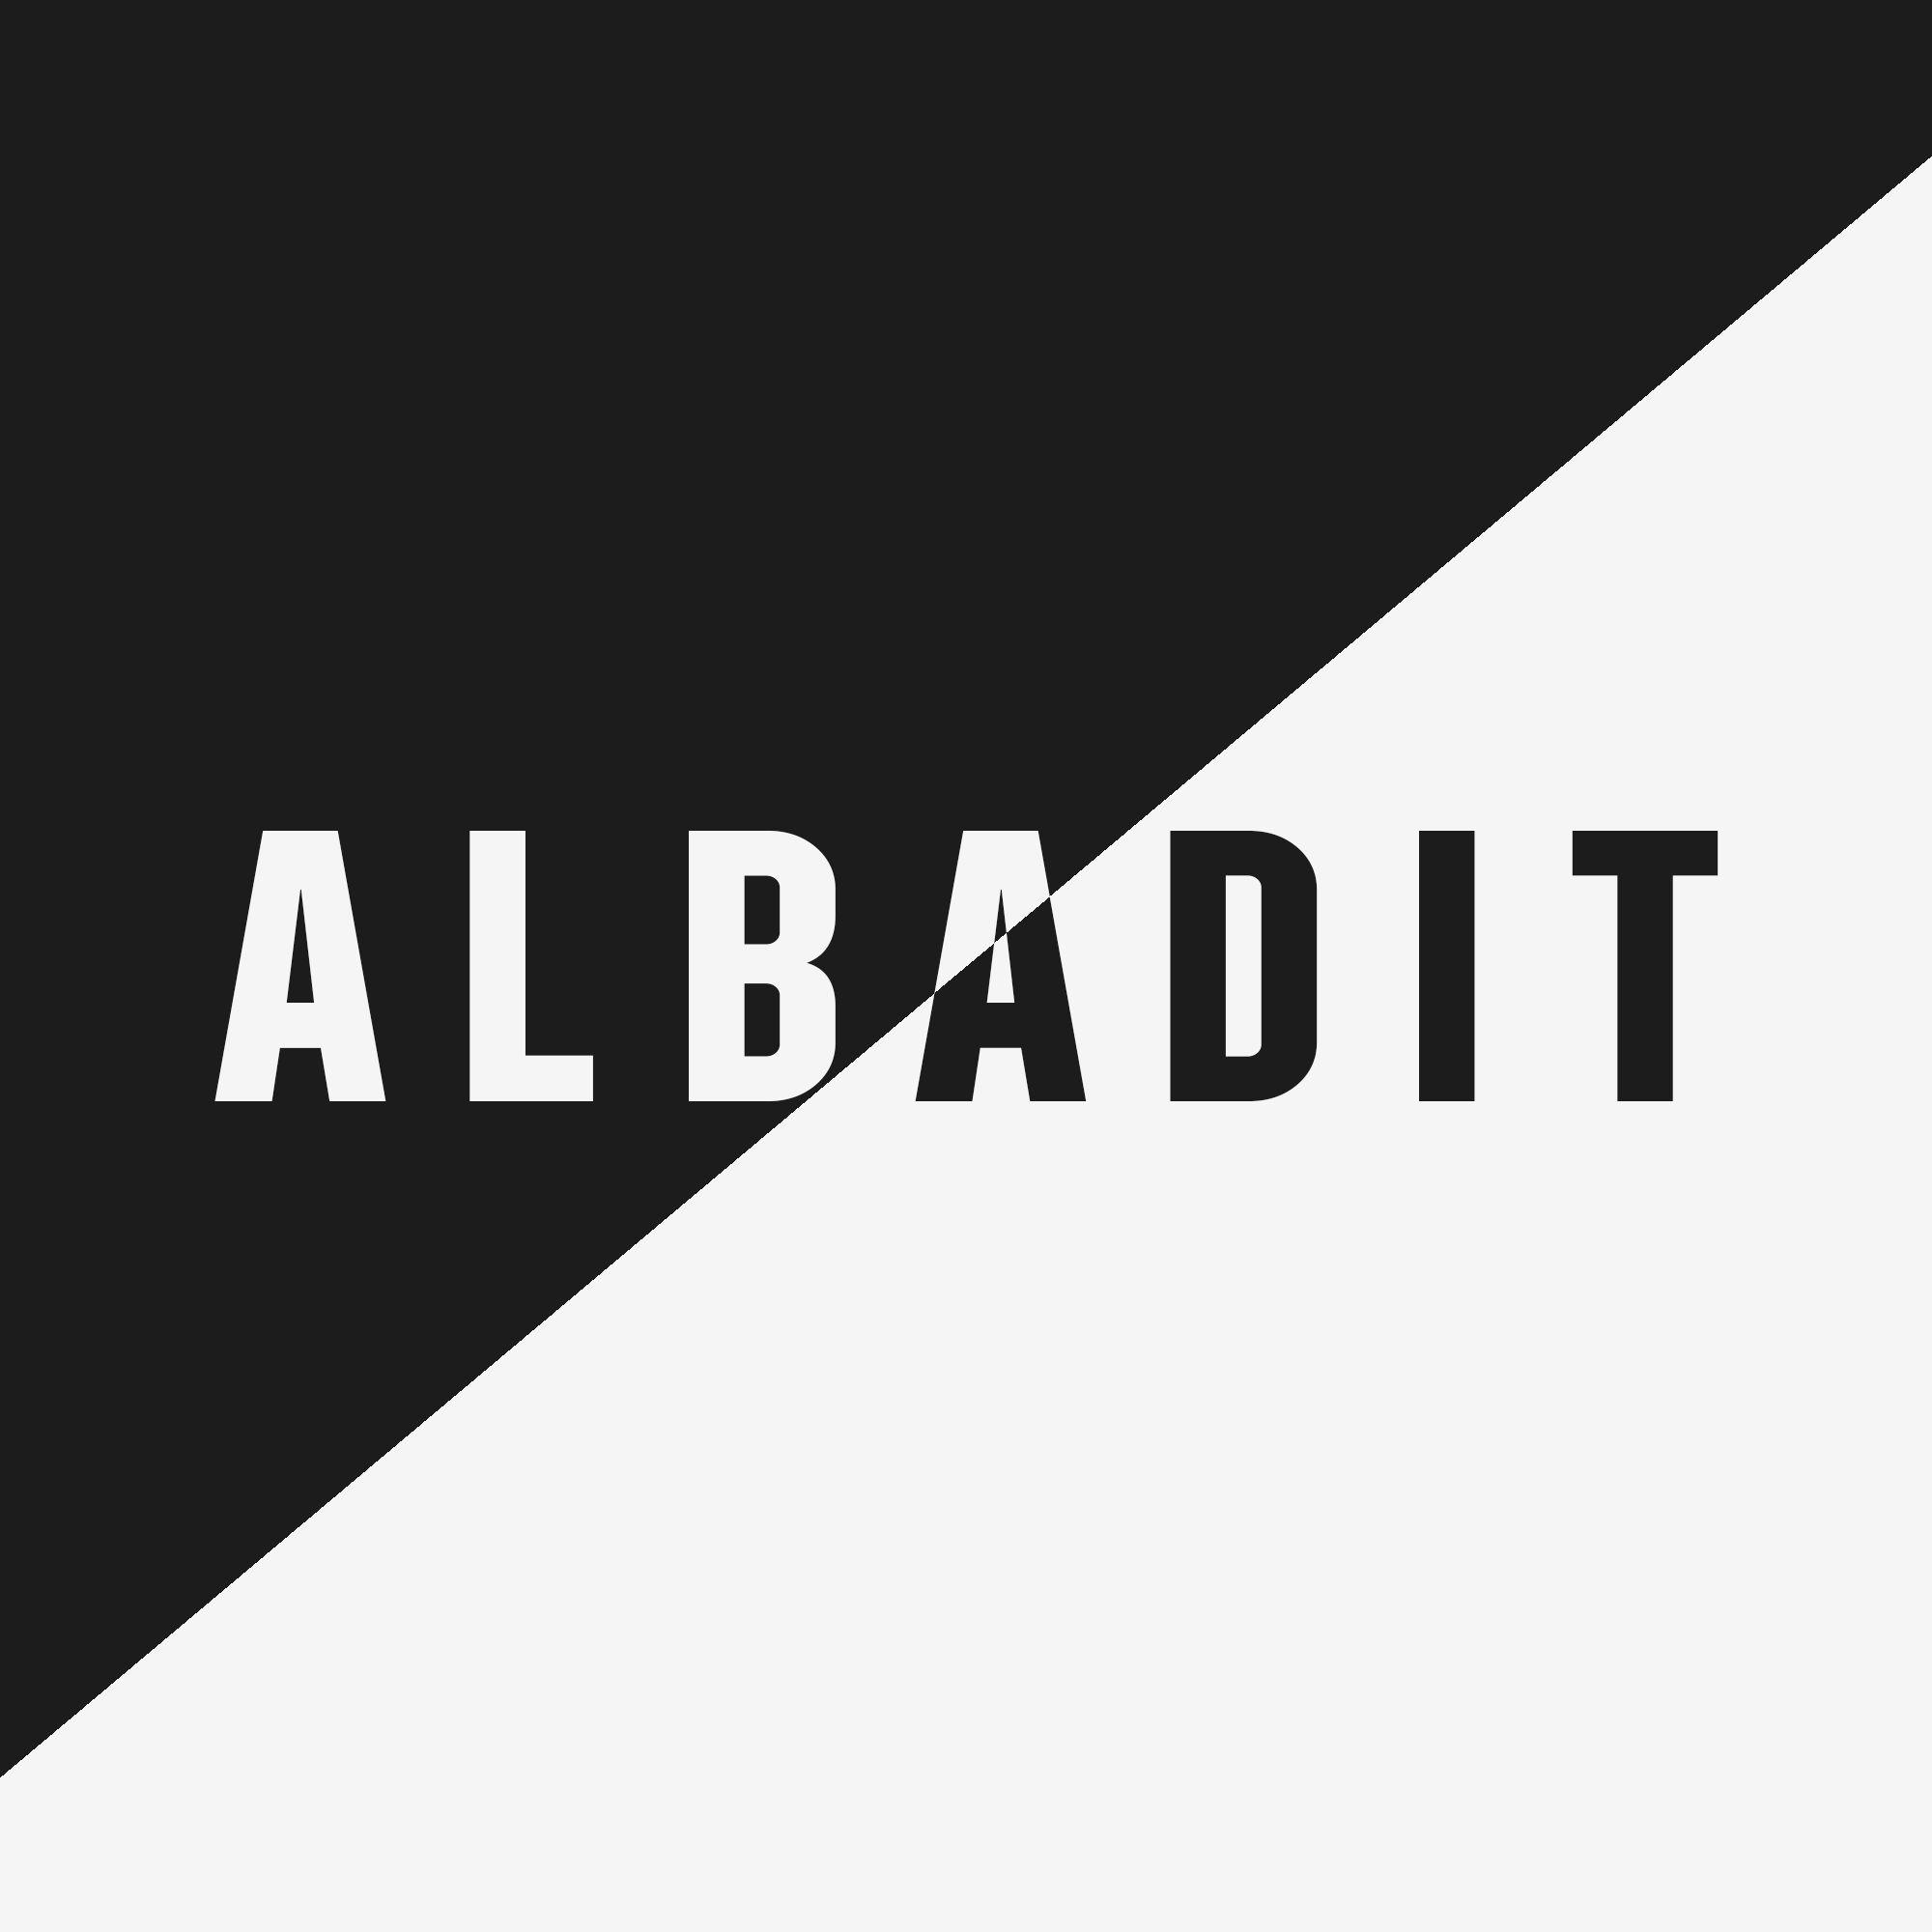 Player Albadit avatar